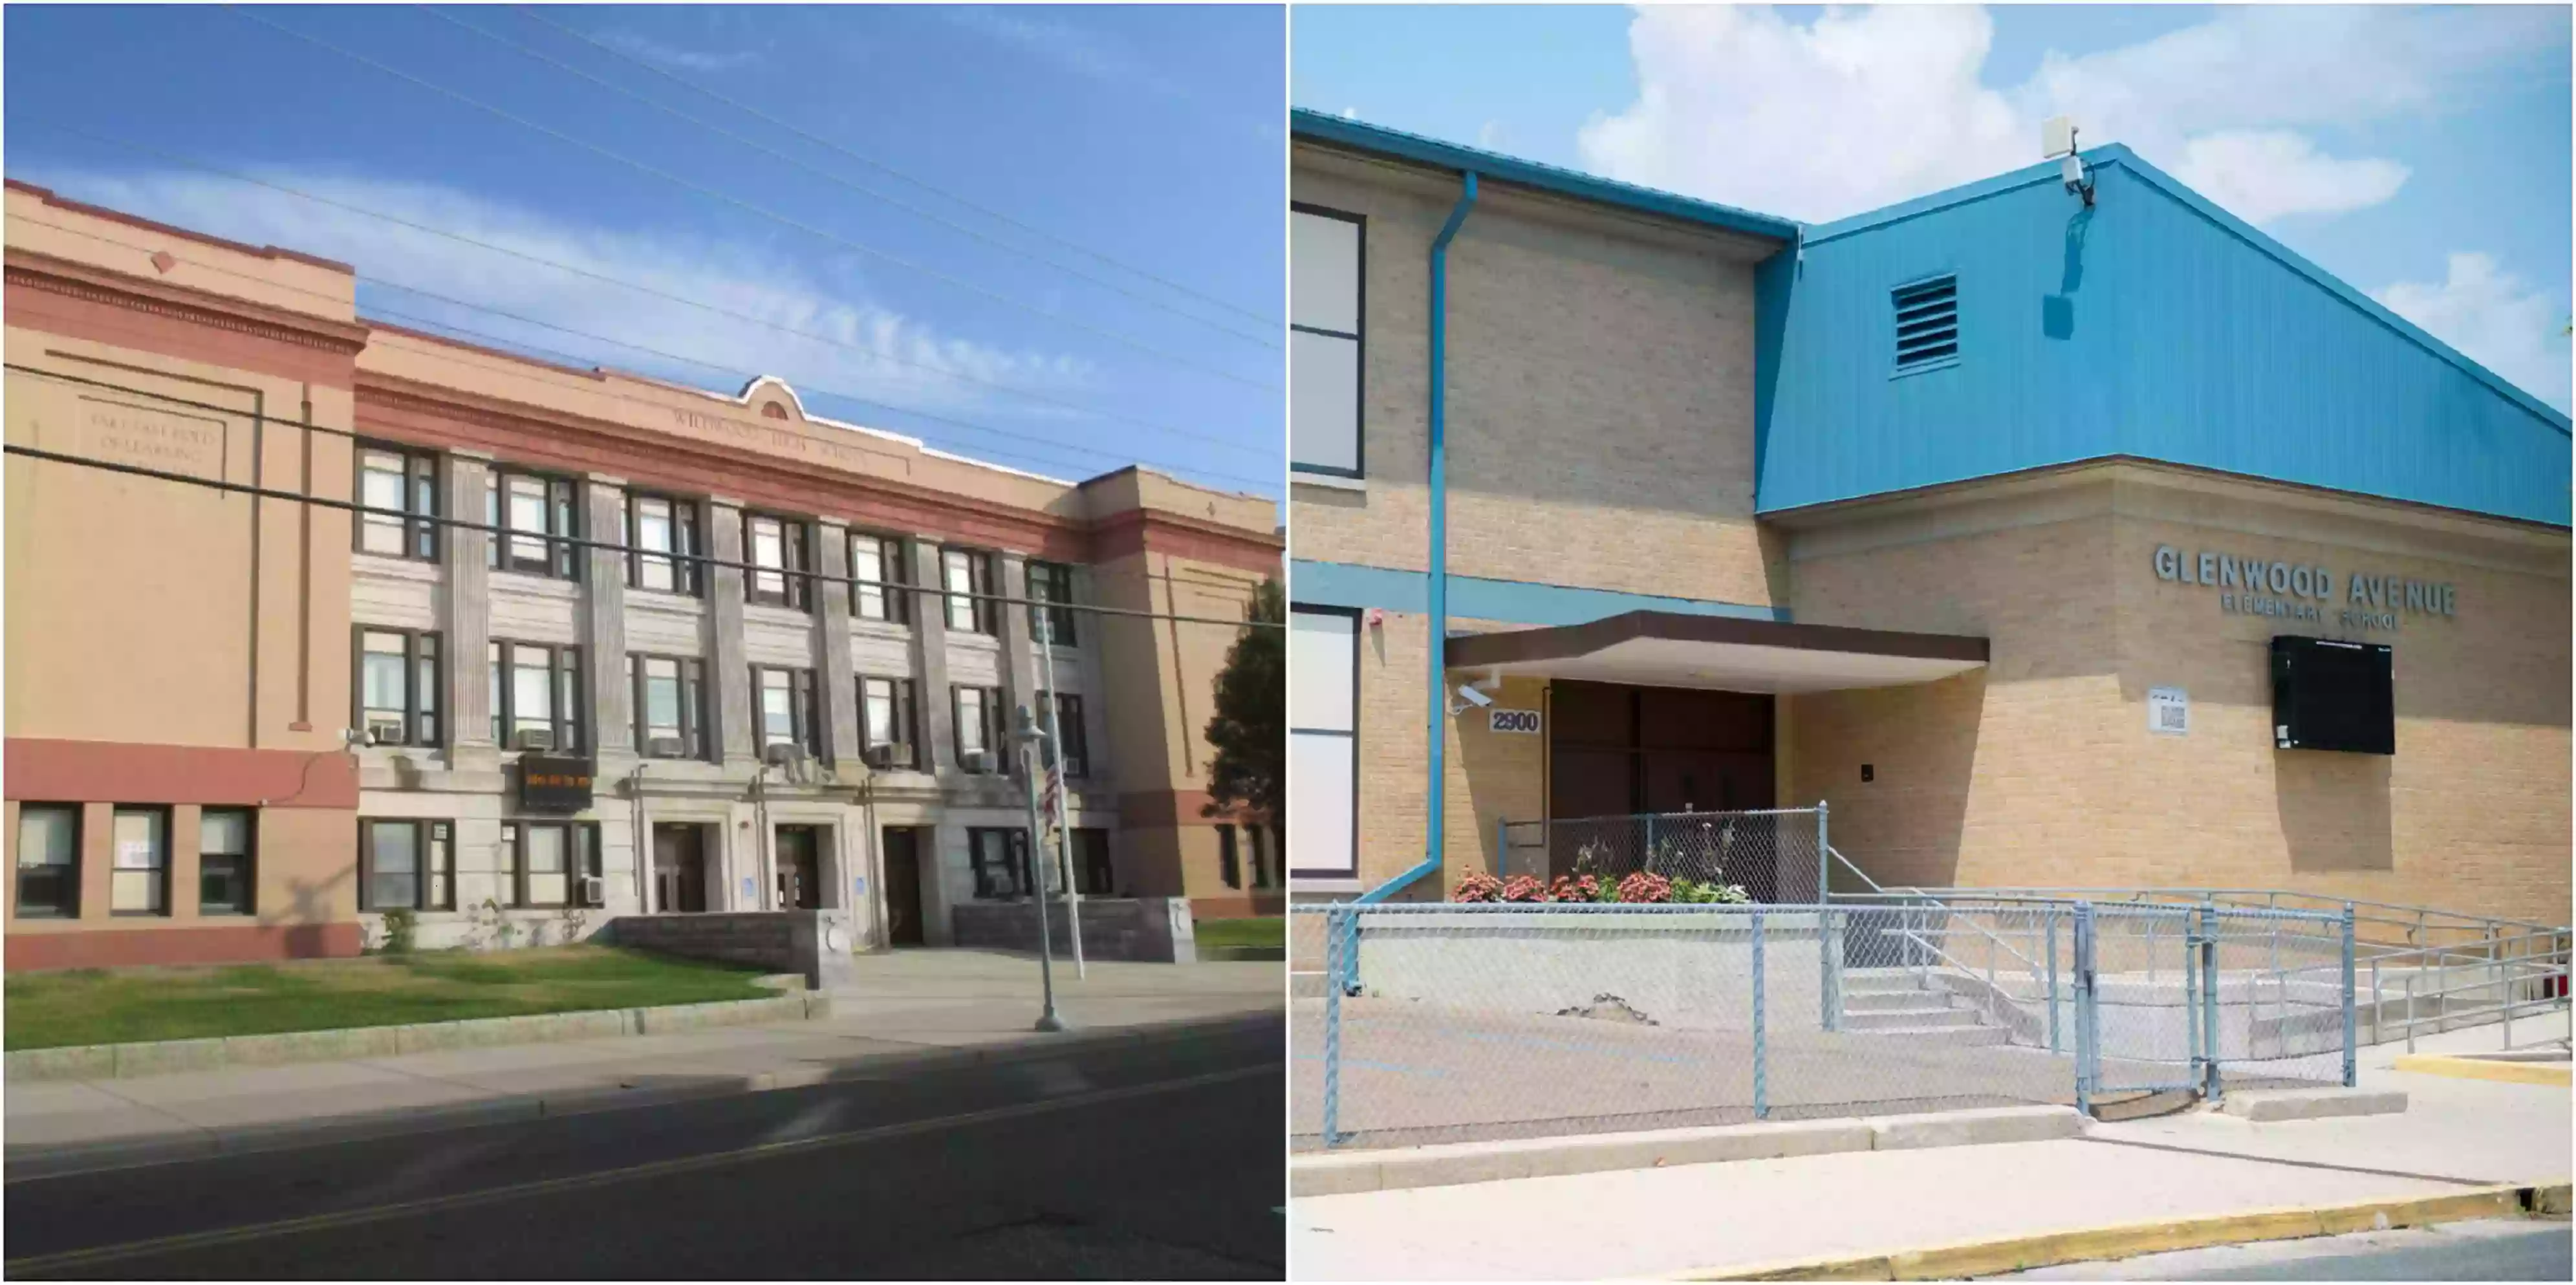 Glenwood Avenue Elementary School